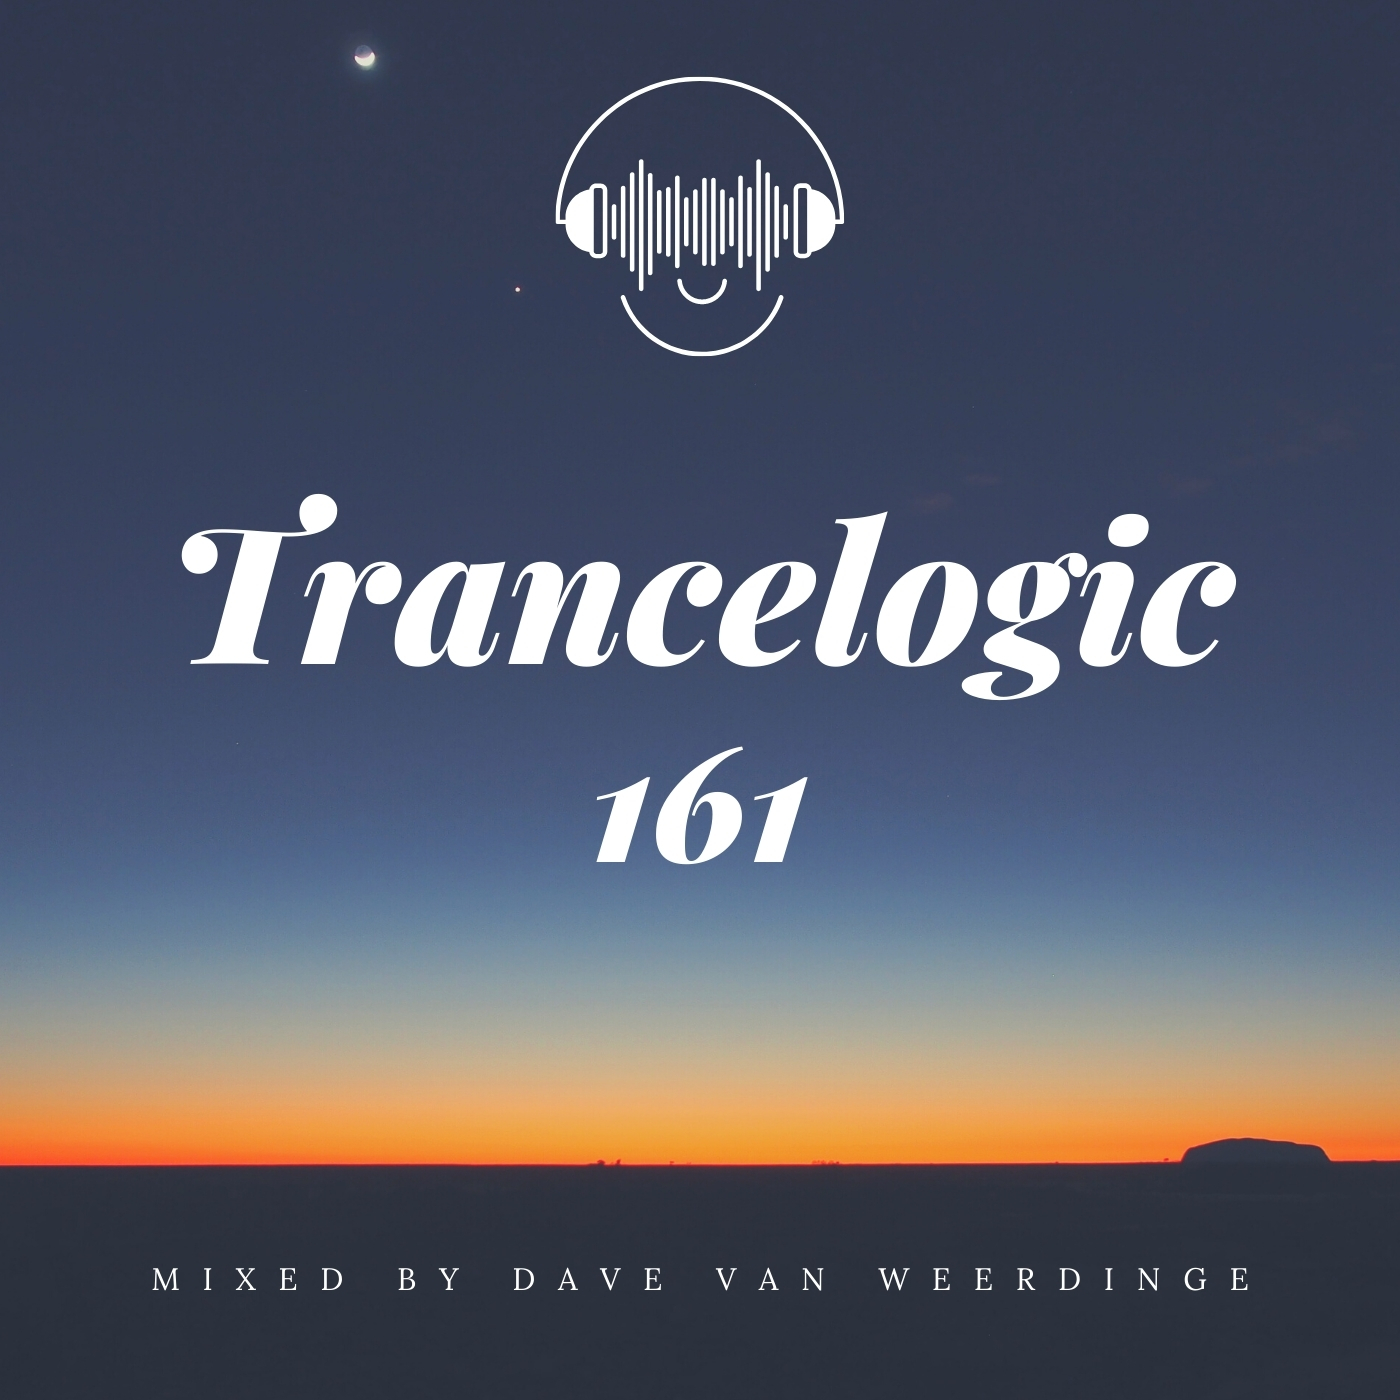 Trancelogic 161 by Dave van Weerdinge